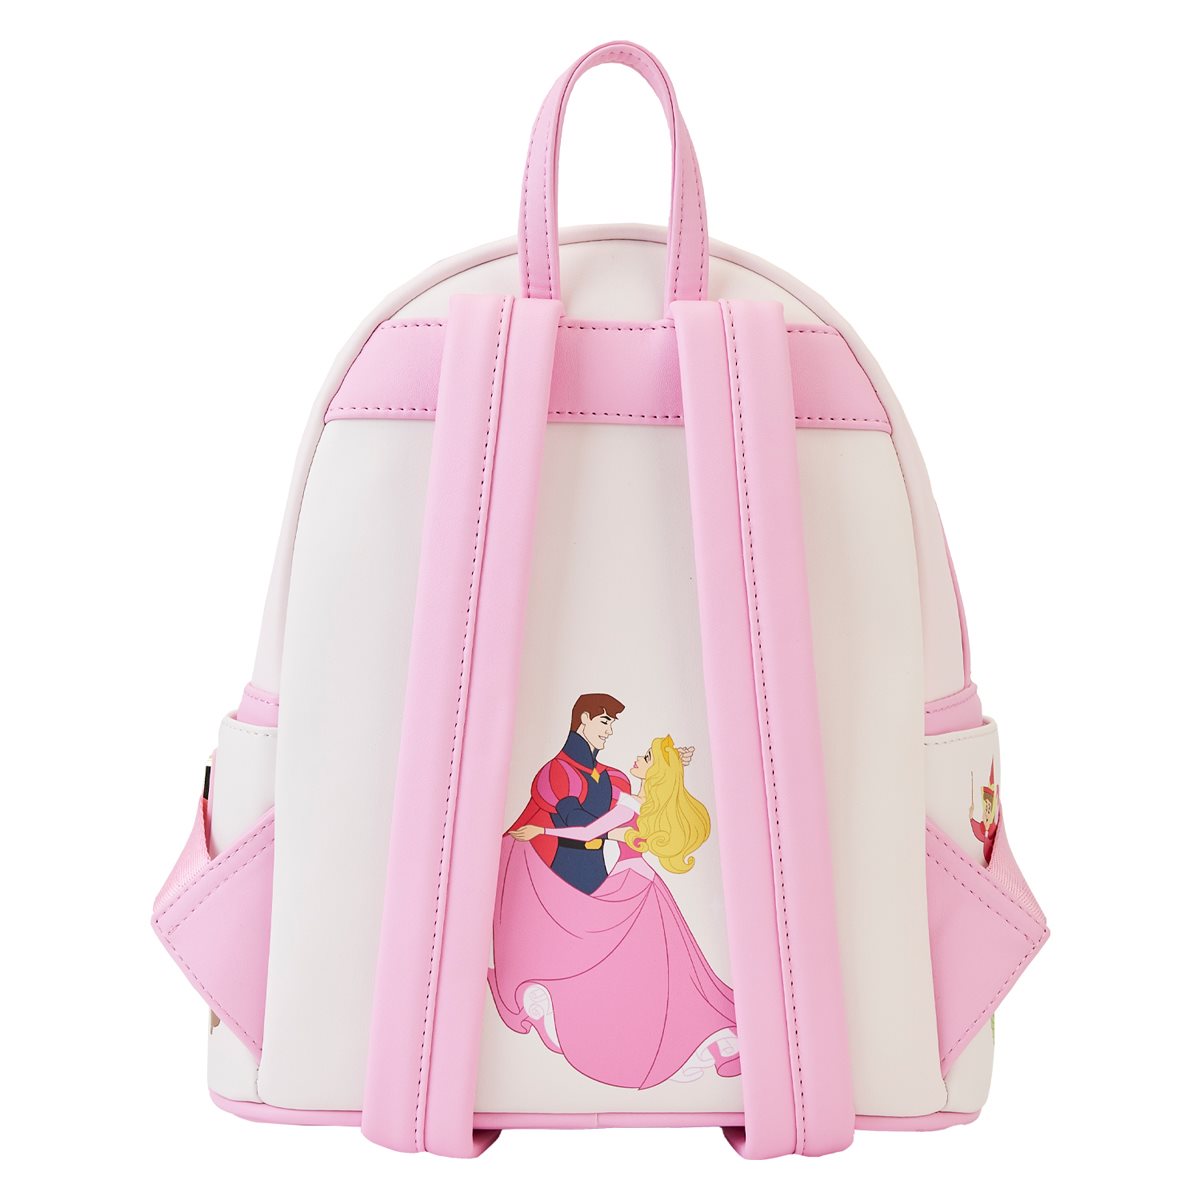 Loungefly Disney Sleeping Beauty Castle Backpack Pink Black